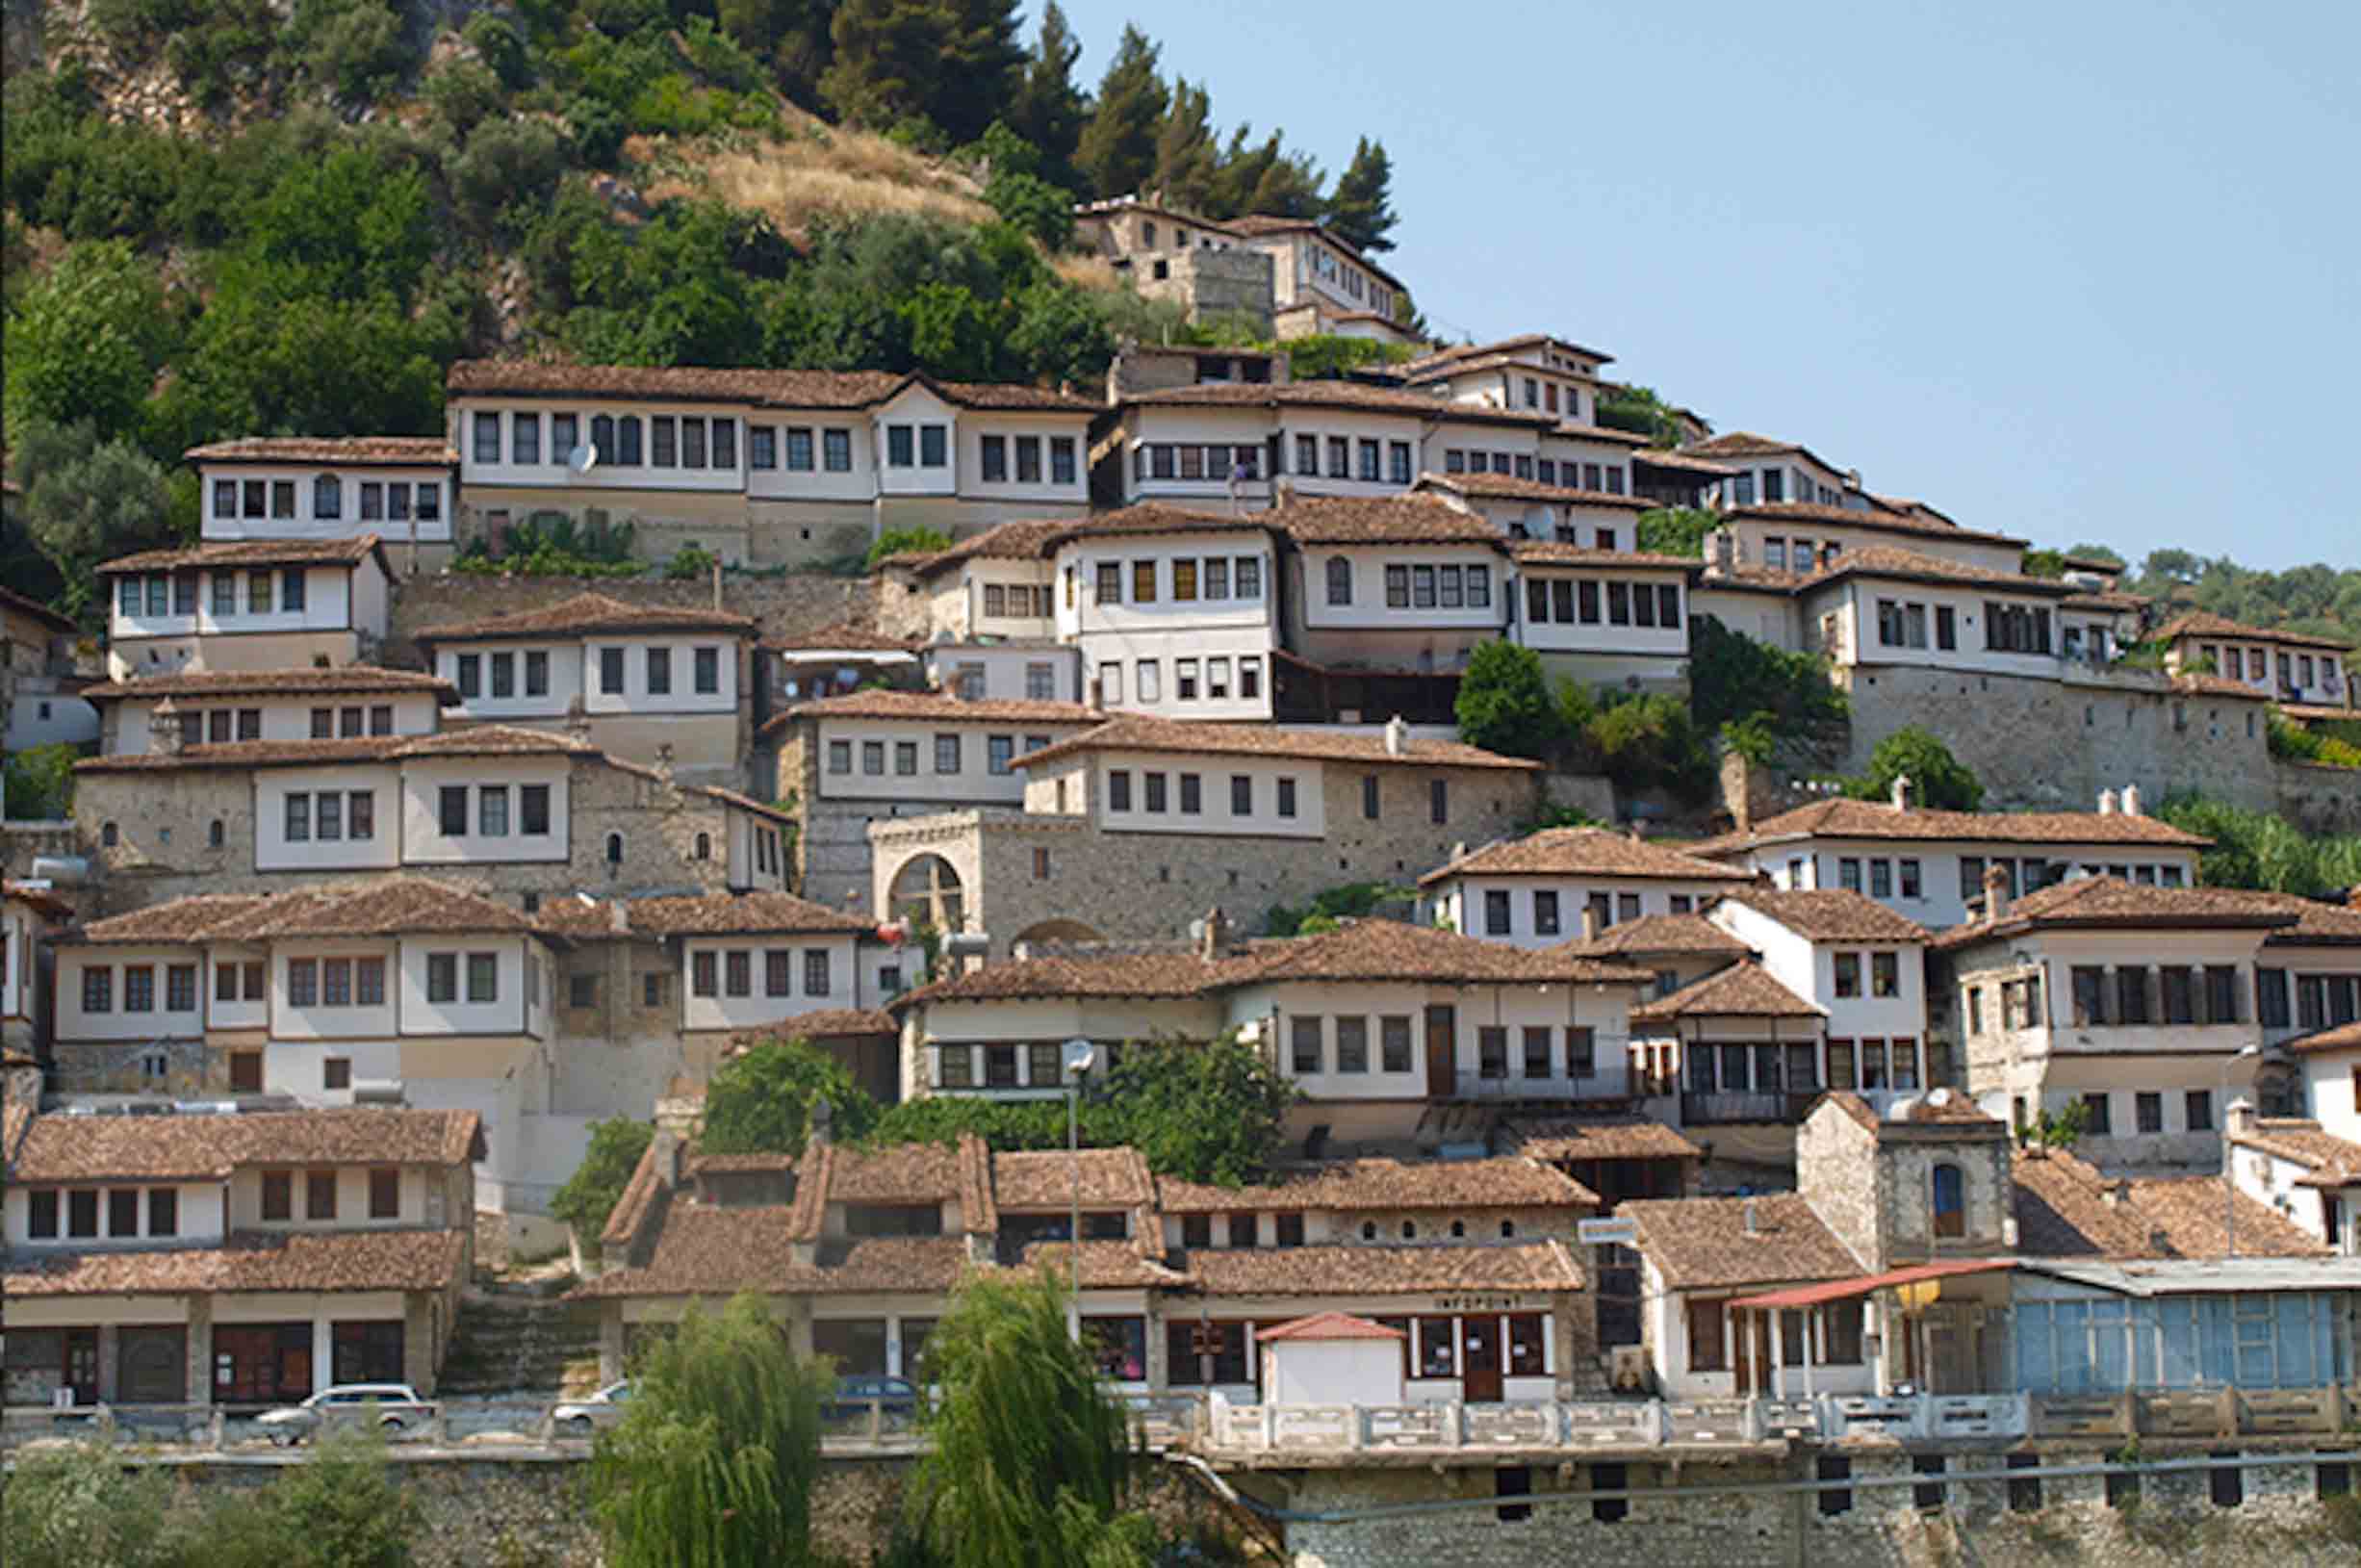 Vlora to Berat, Port of Durres to Berat, UNESCO town – Berat, the pride of Albanian antiquity and architecture. From the port of Durres to Berat.